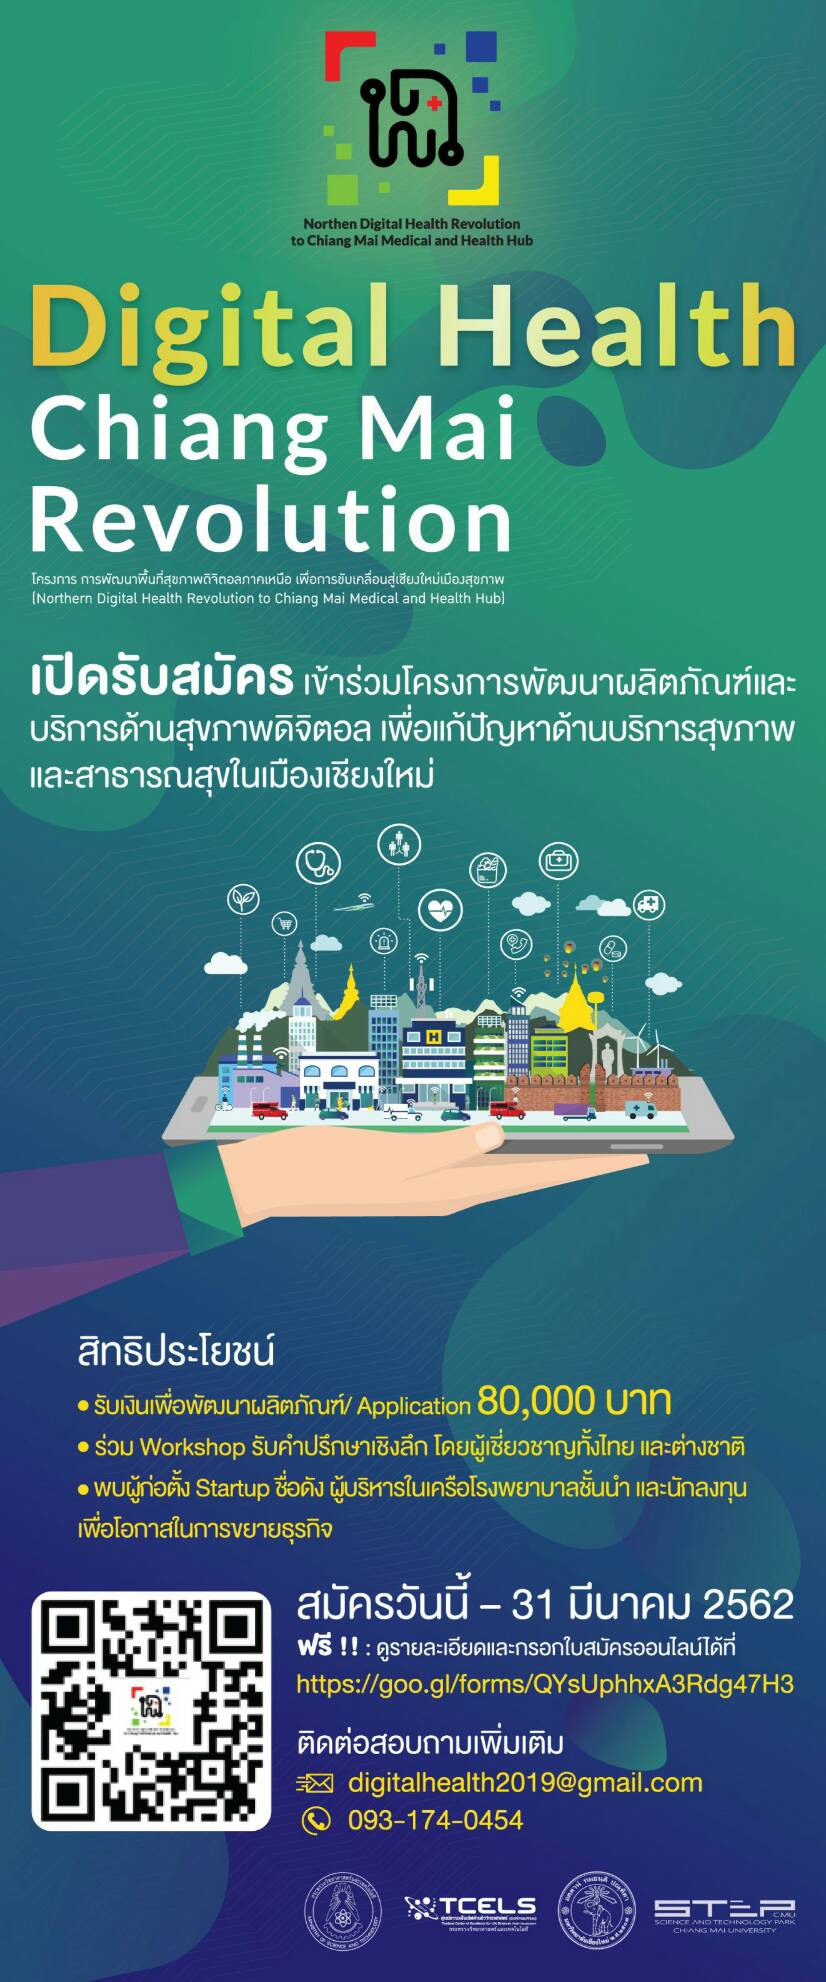 Digital Health Chiang Mai Revolution